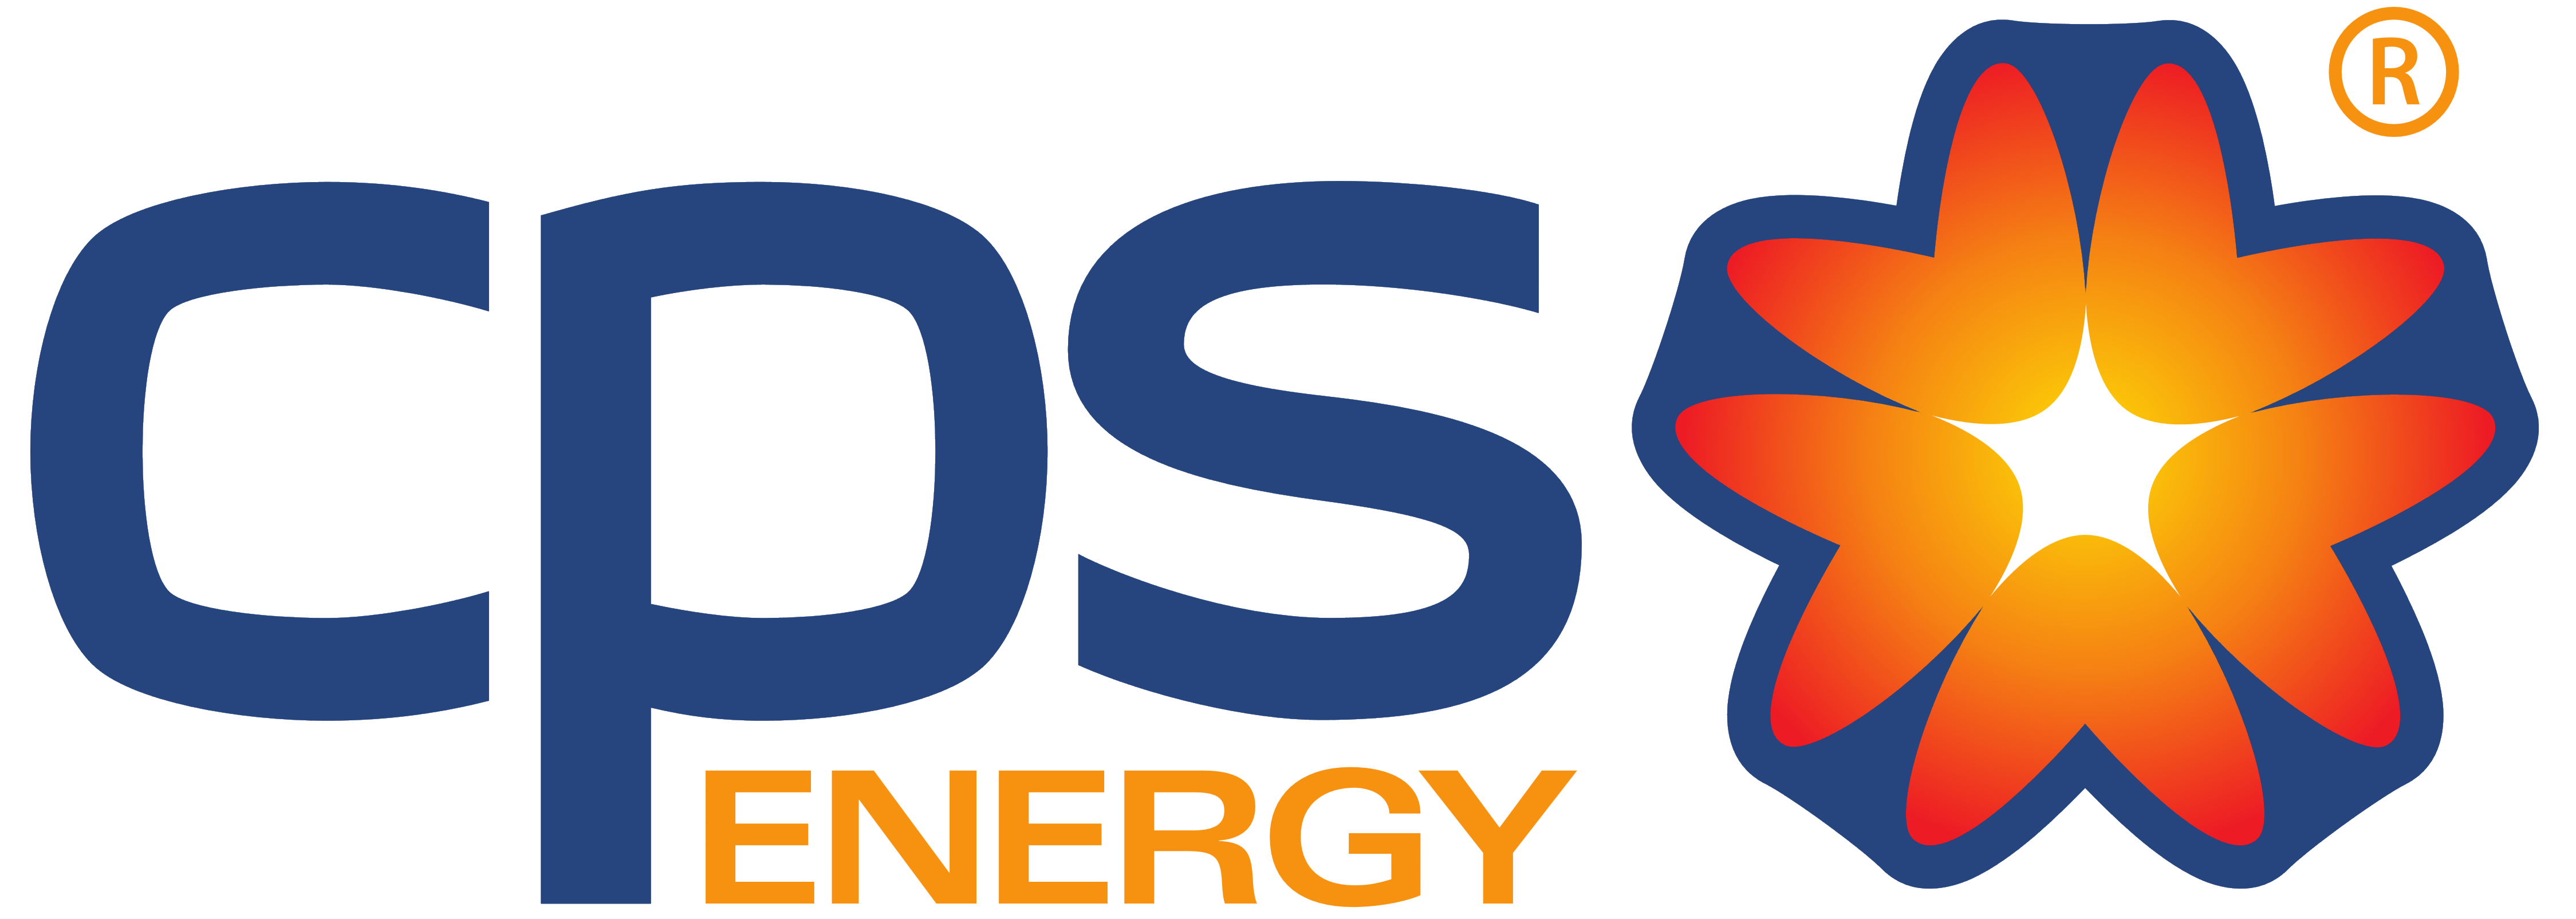 CPS Energy Logos Download